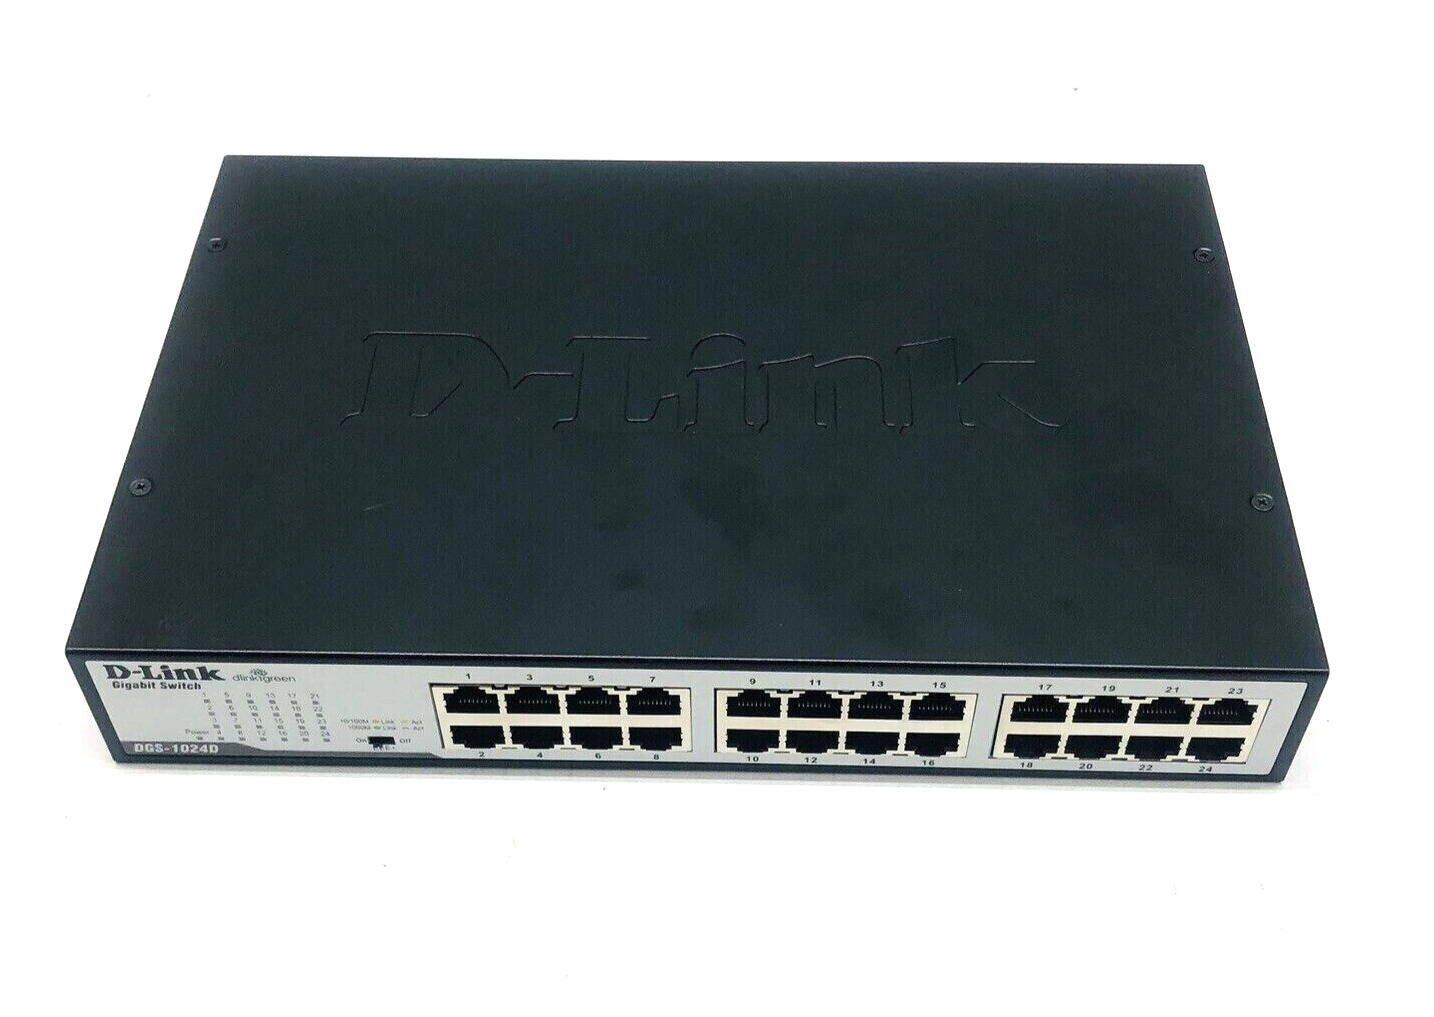 D-Link DGS-1024D 24-Port Gigabit Unmanaged Metal Desktop/Rackmount Switch w/GIFT